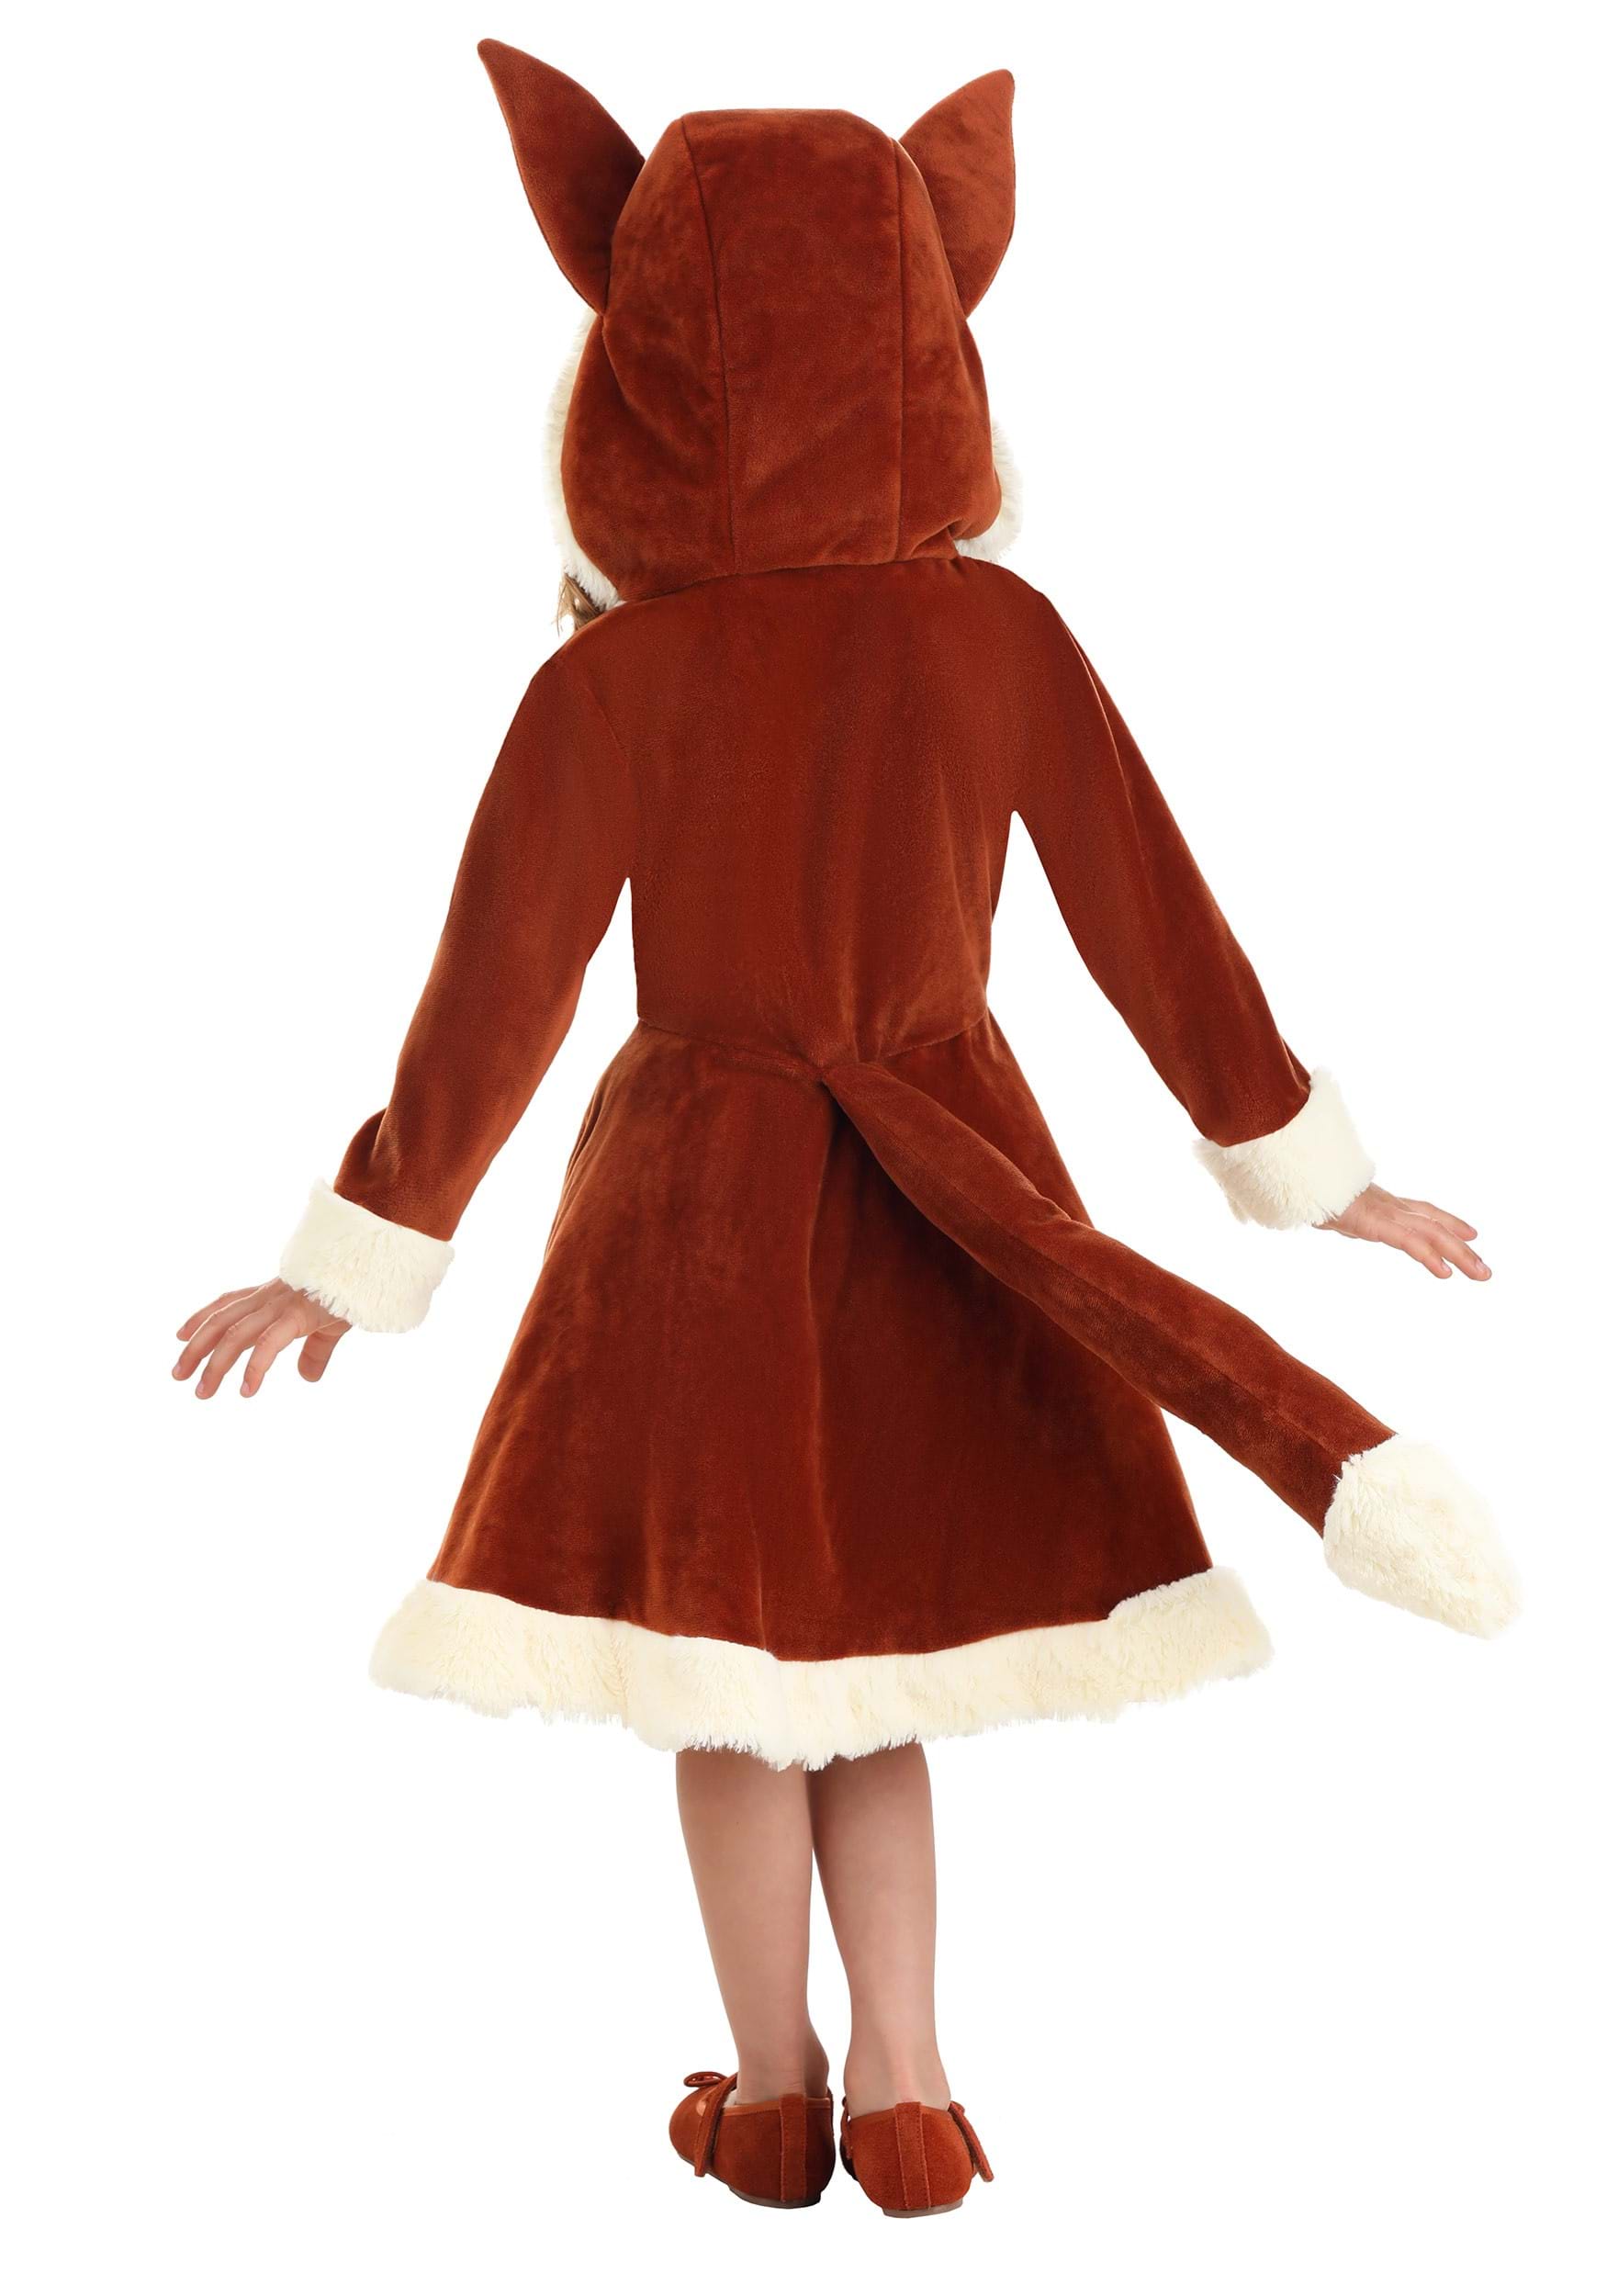 Fox Dress Toddler Costume